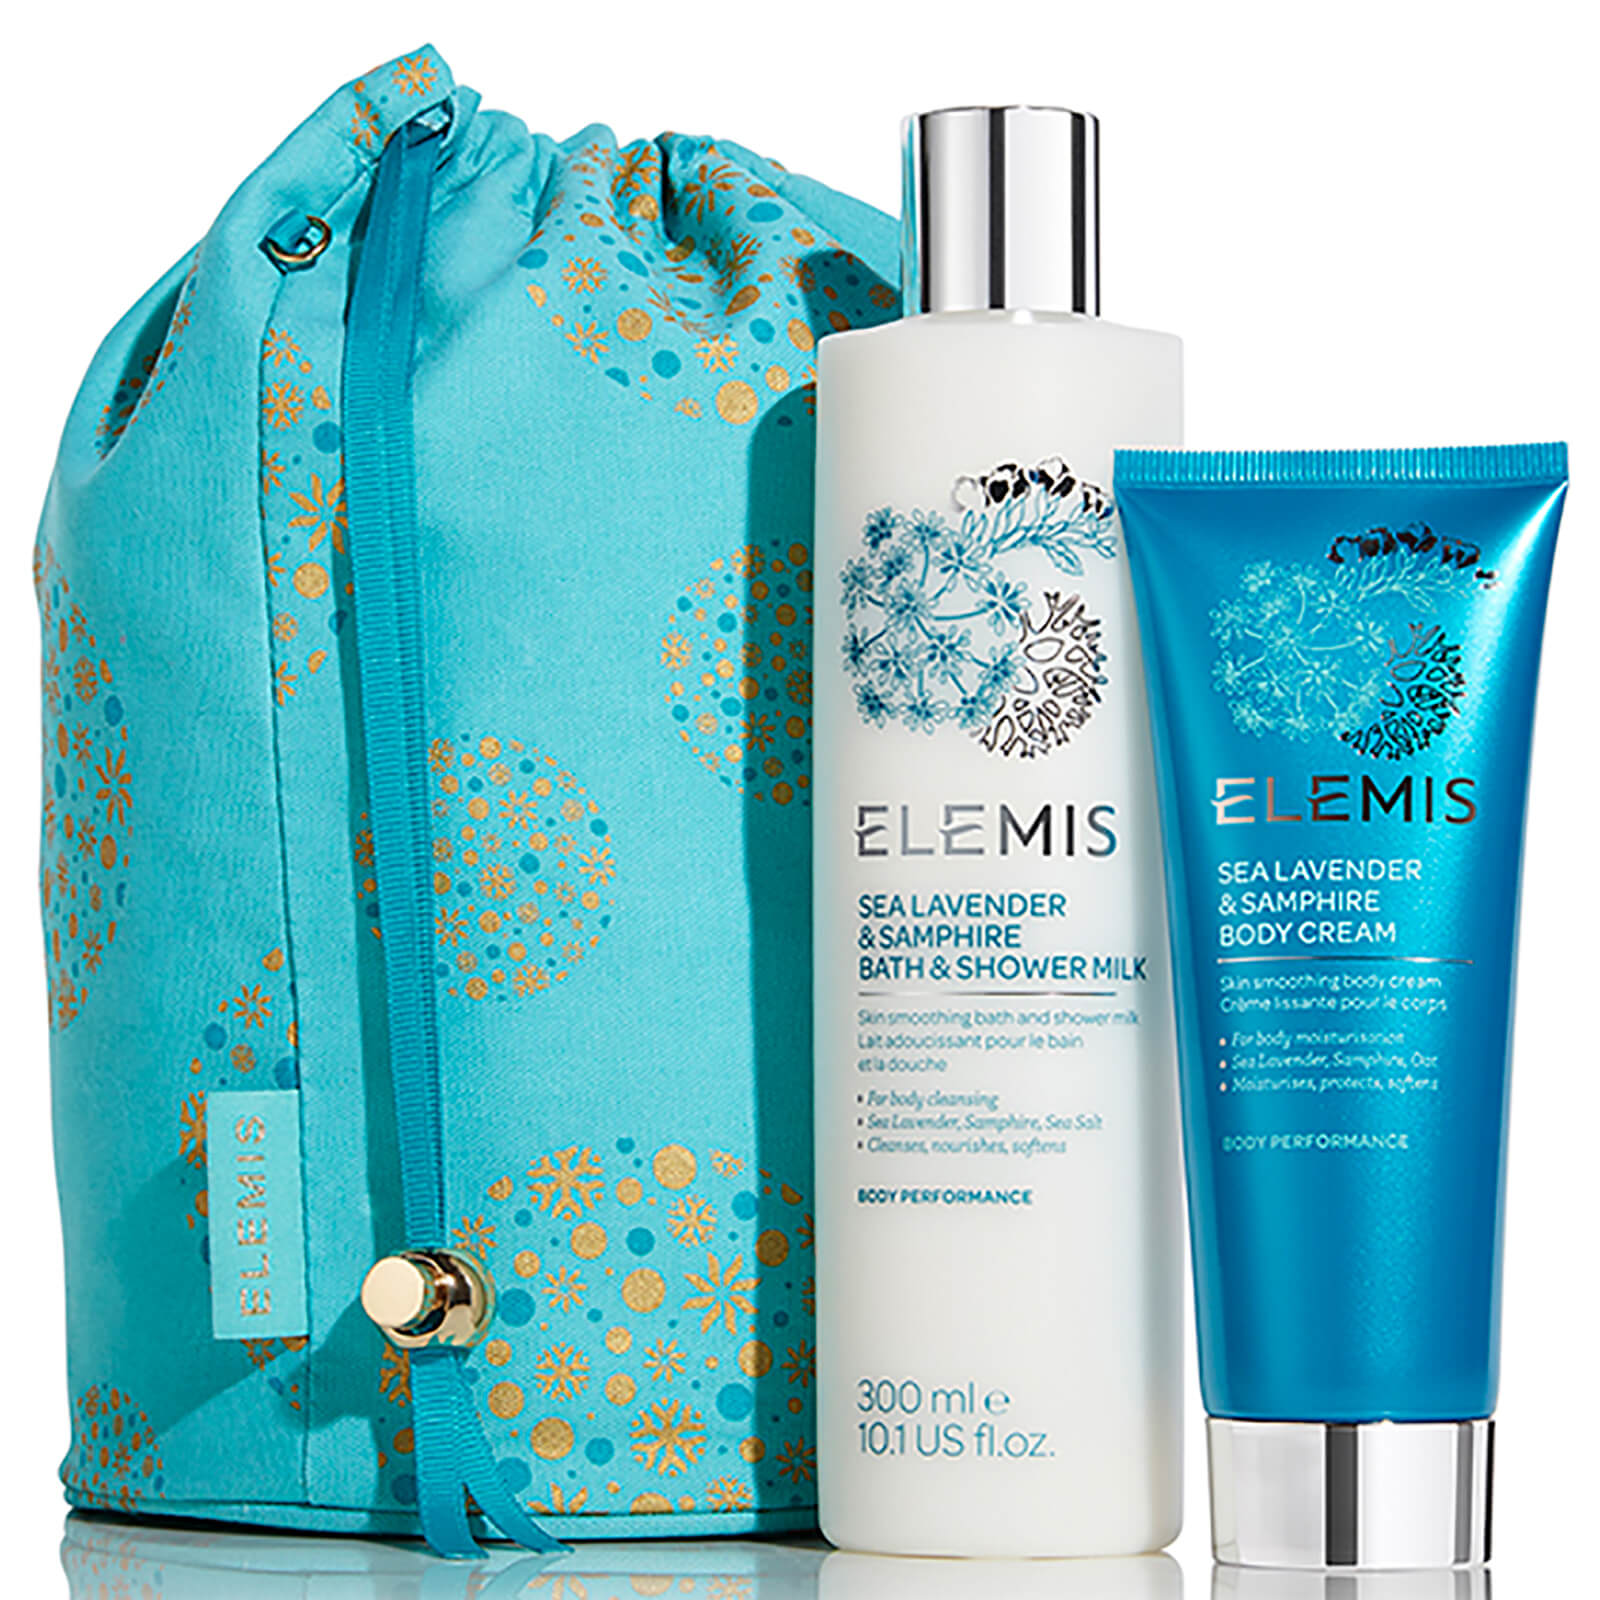 Elemis Body Beautiful Gift Set - Sea Lavender & Samphire